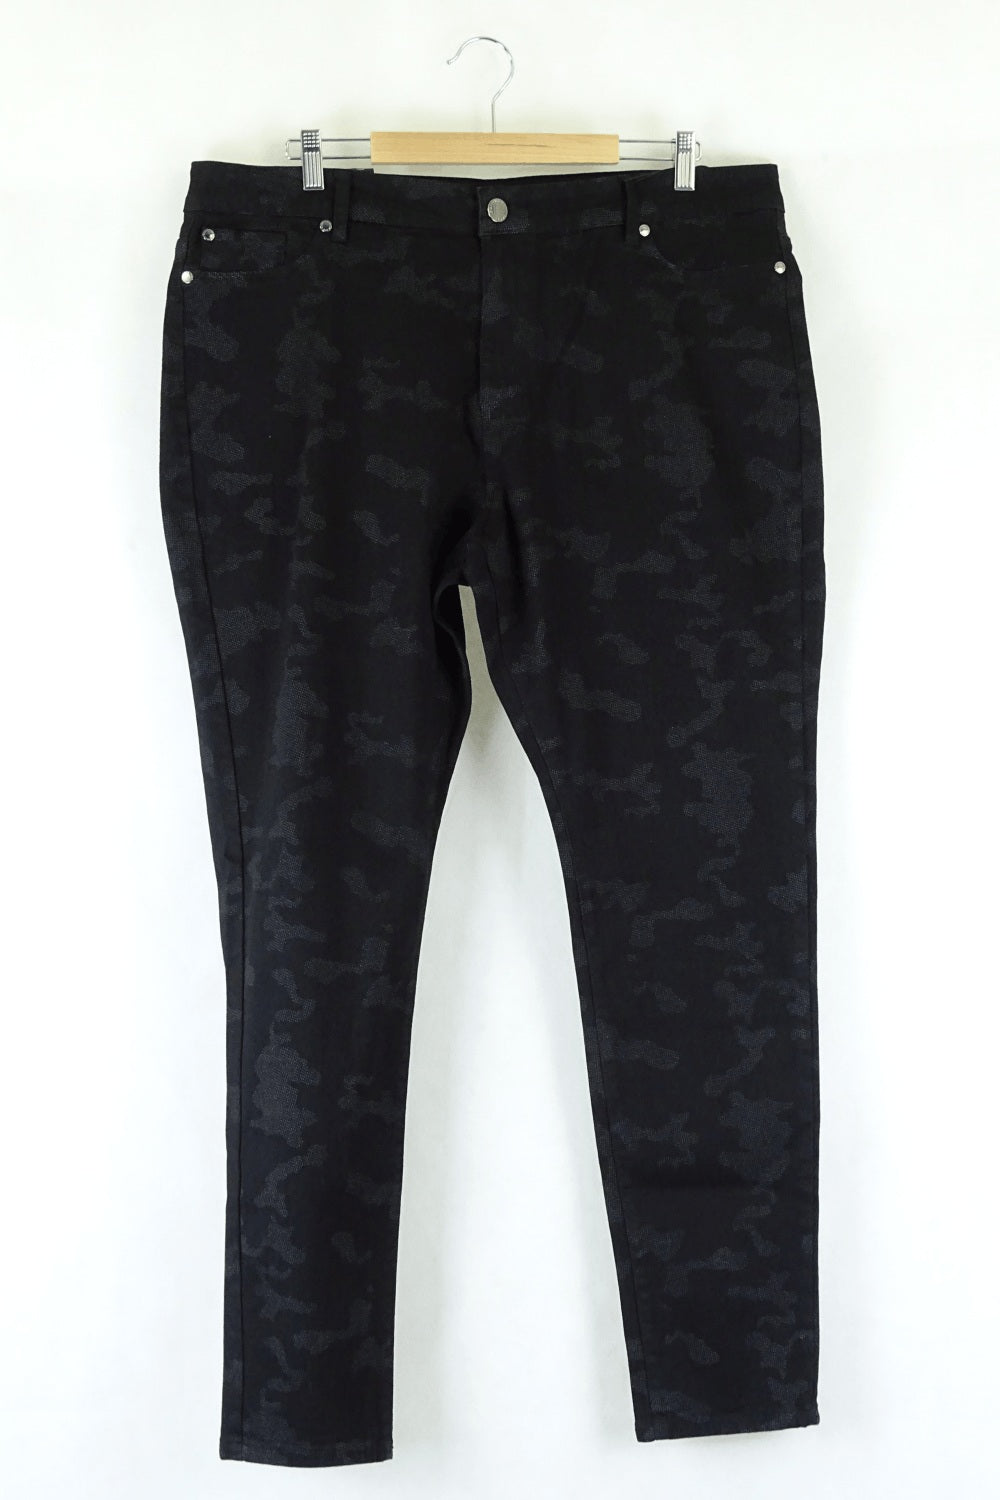 City Chic Black Camo Jeans 18R ( RRP $99.95)